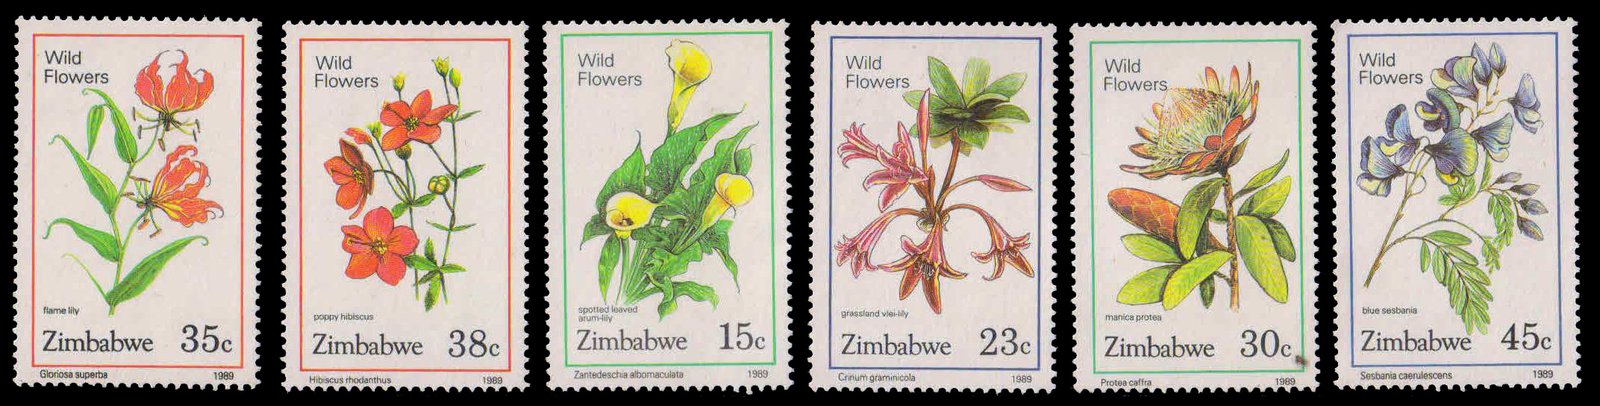 ZIMBABWE 1989-Wild Flowers, Plants, Set of 6, Mint, S.G. 750-755-Cat £ 3.75